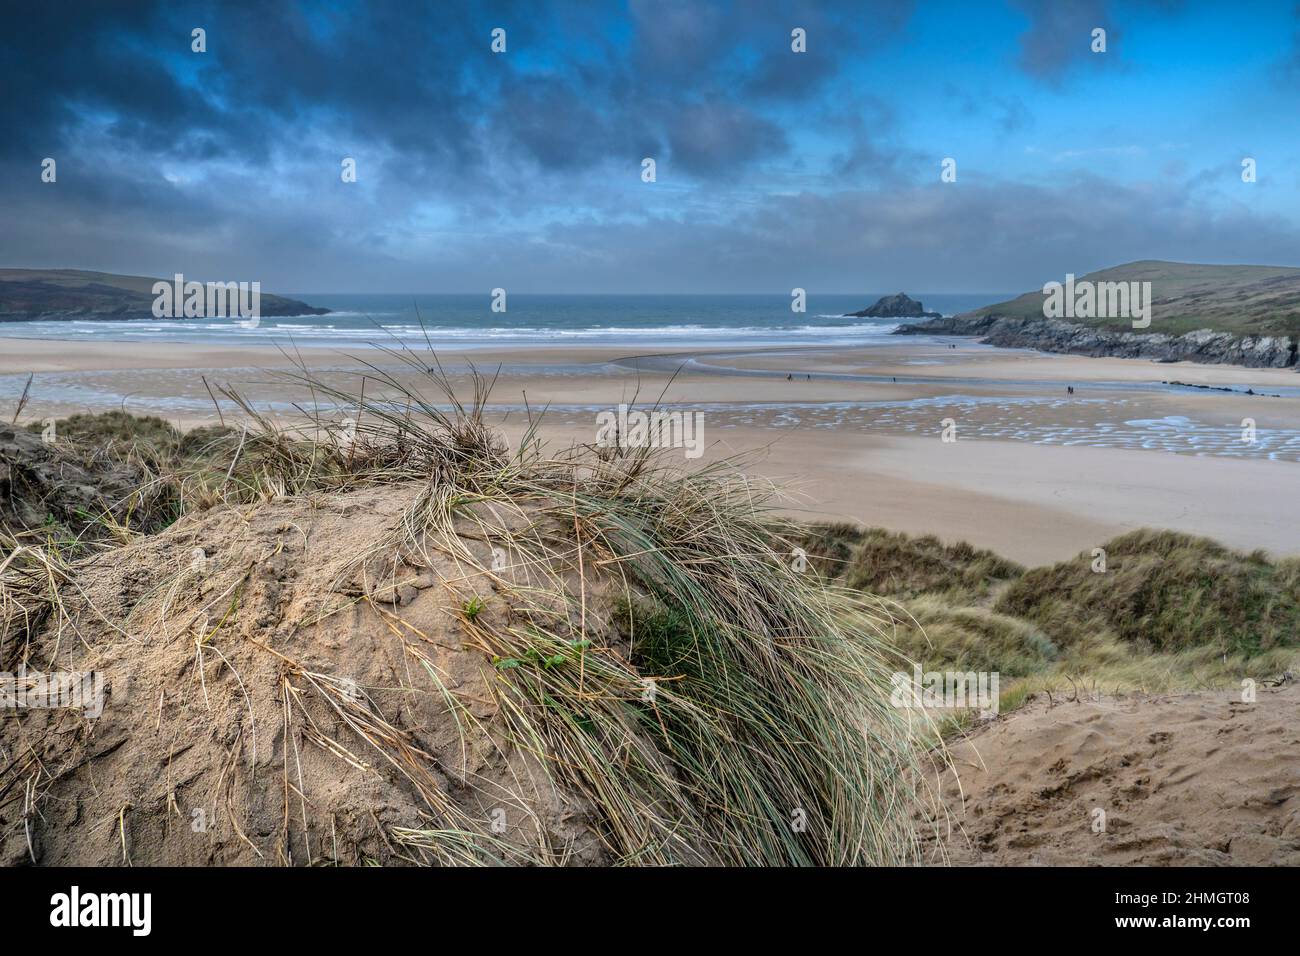 Blick über den preisgekrönten Crantock Beach vom fragilen Dünensystem am Crantock Beach in Newquay in Cornwall. Stockfoto